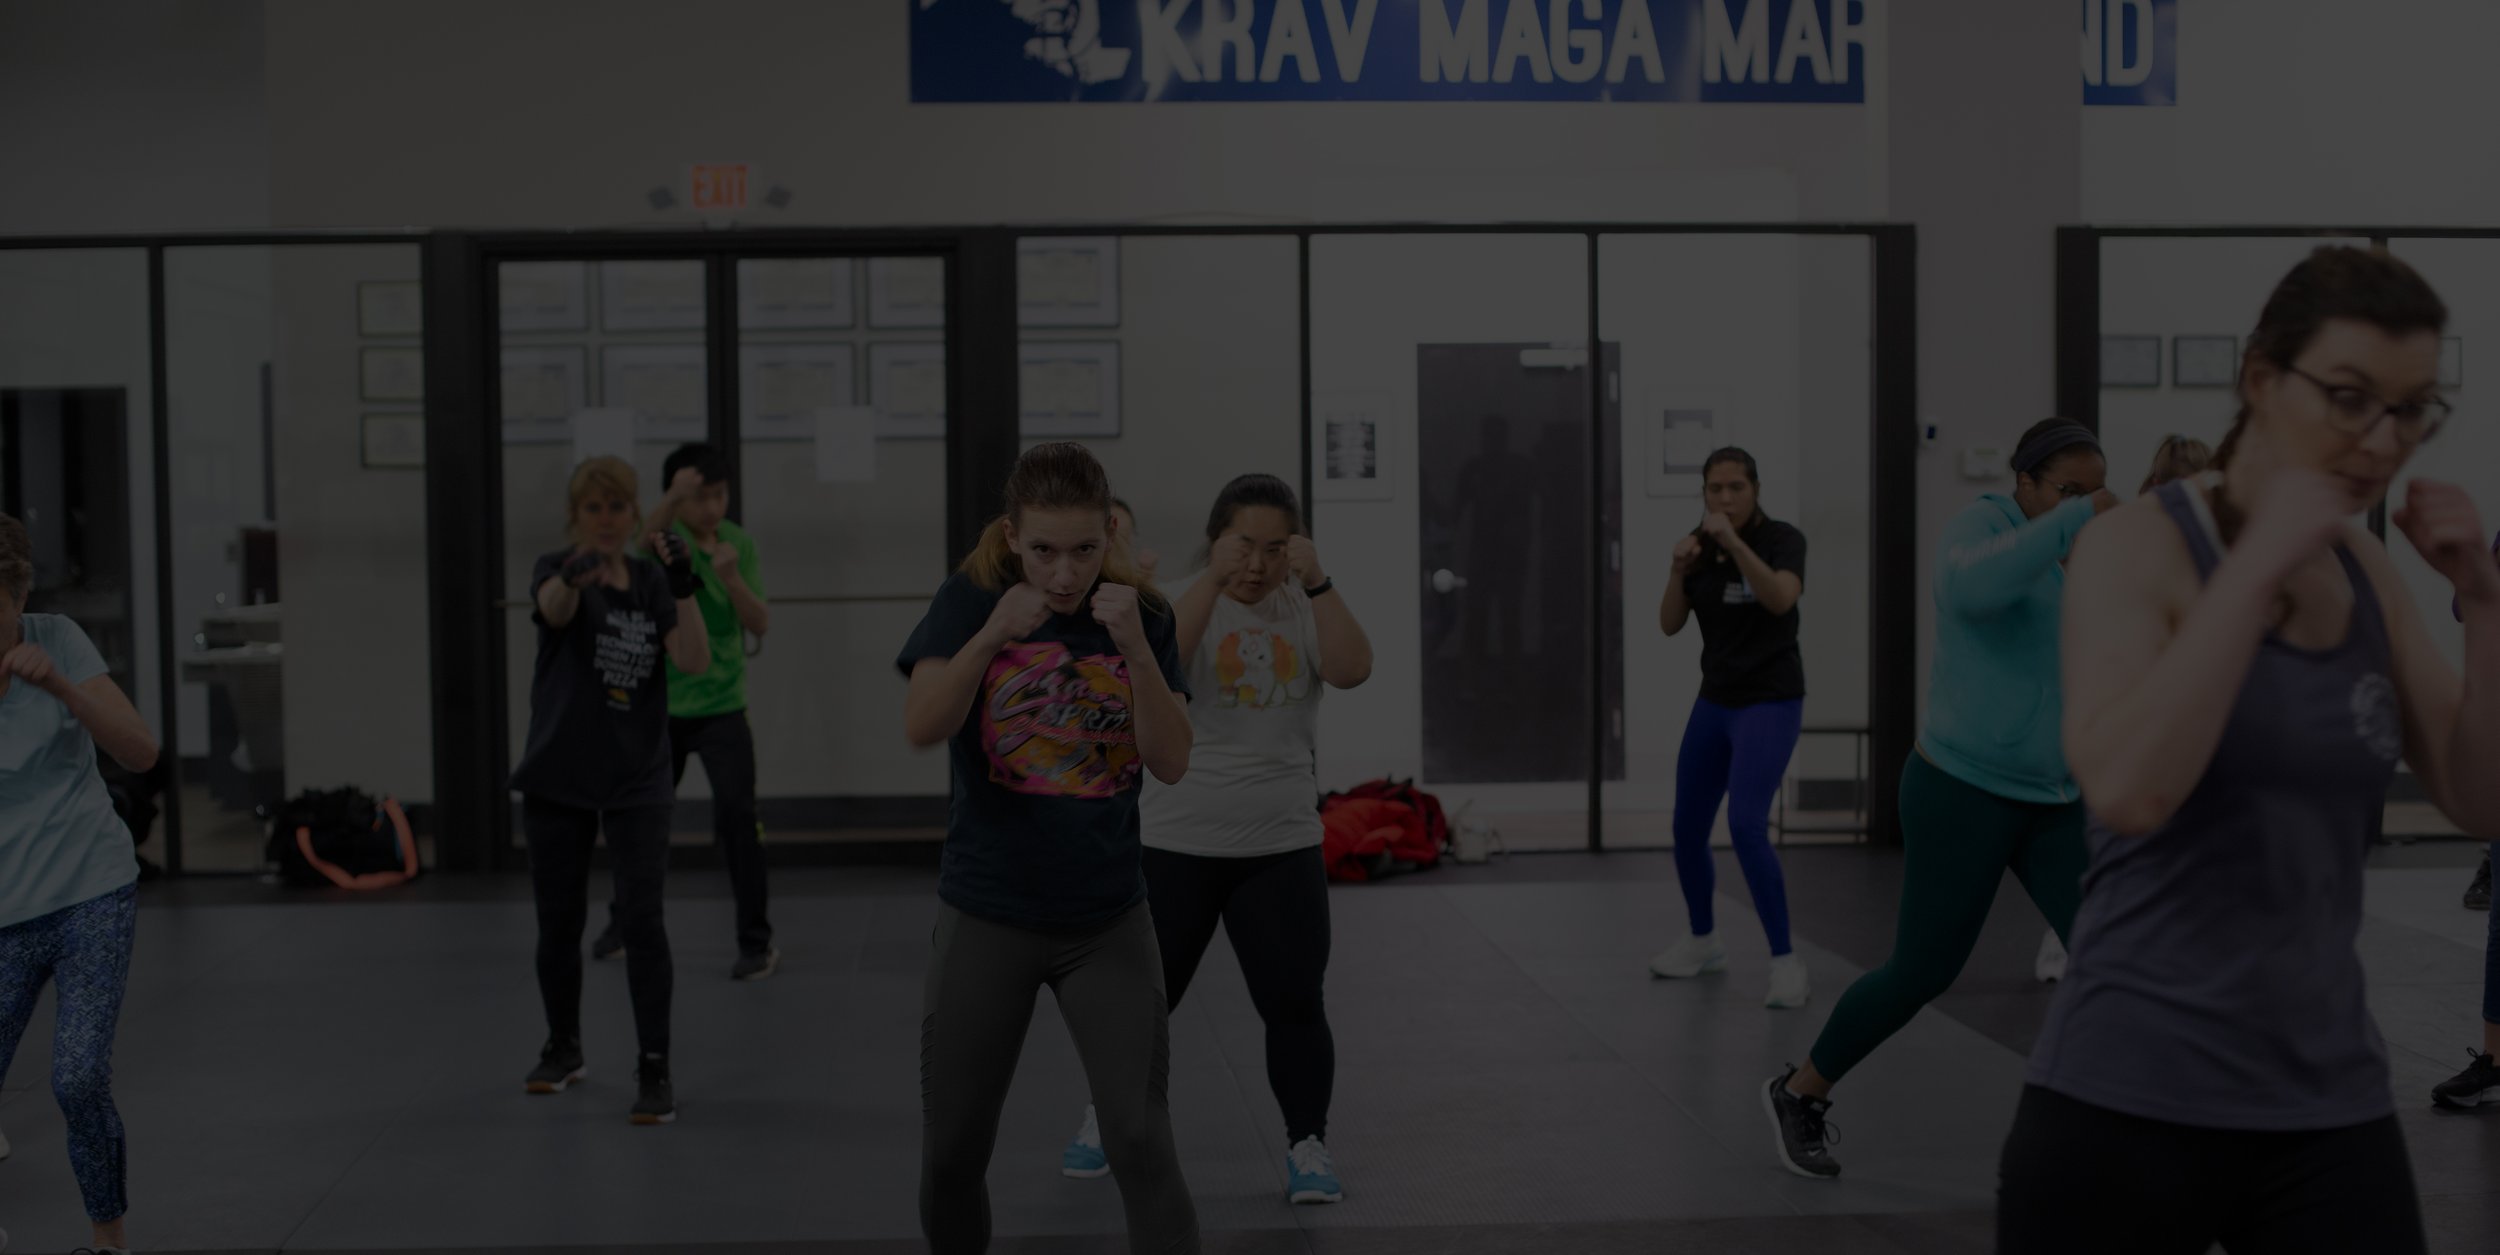 Krav Maga Maryland, Self-Defense & Fitness